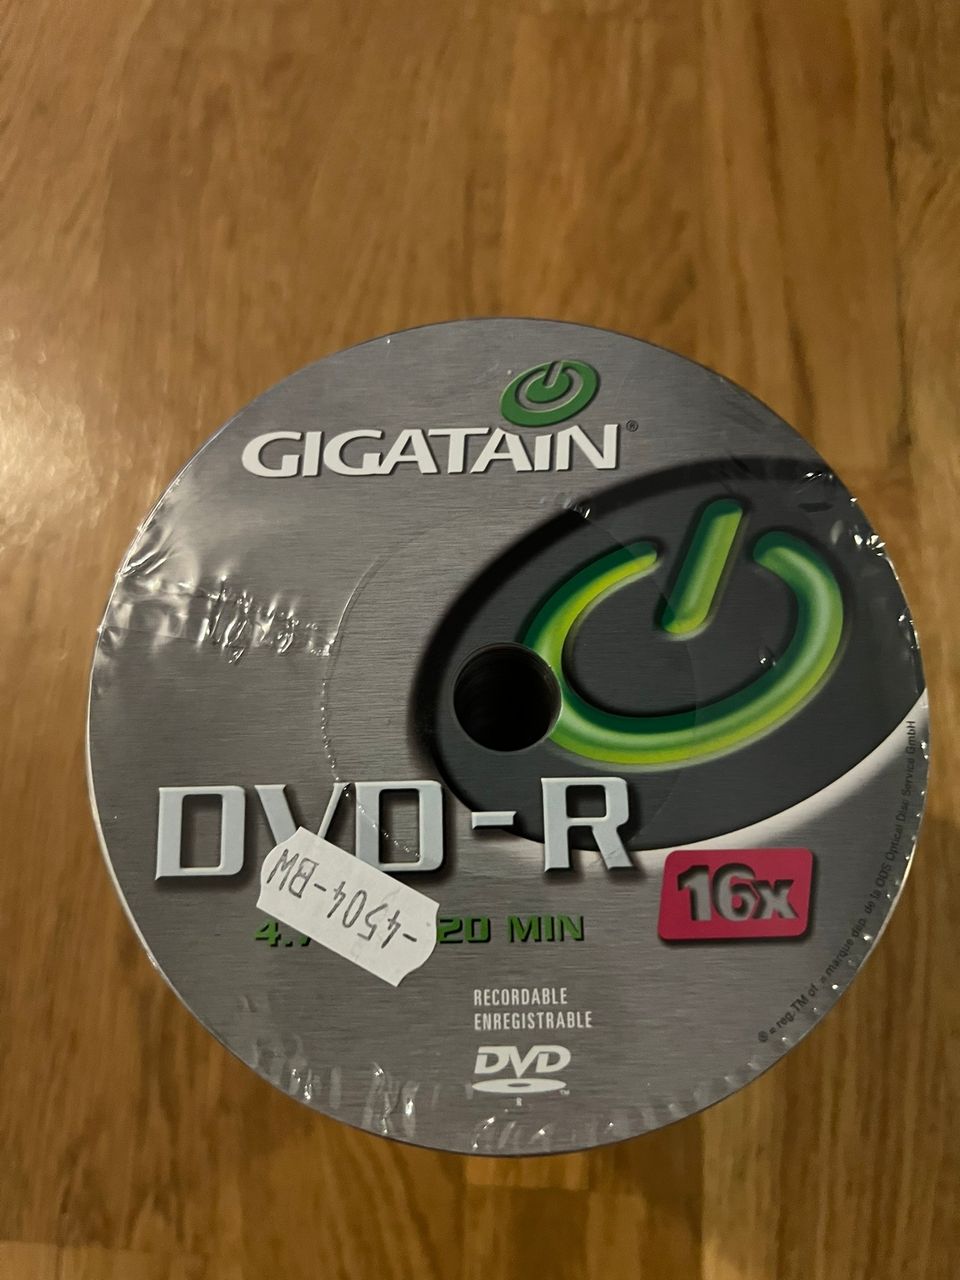 Gigatain 16x 4,7GB DVD-R levyjä iso pino